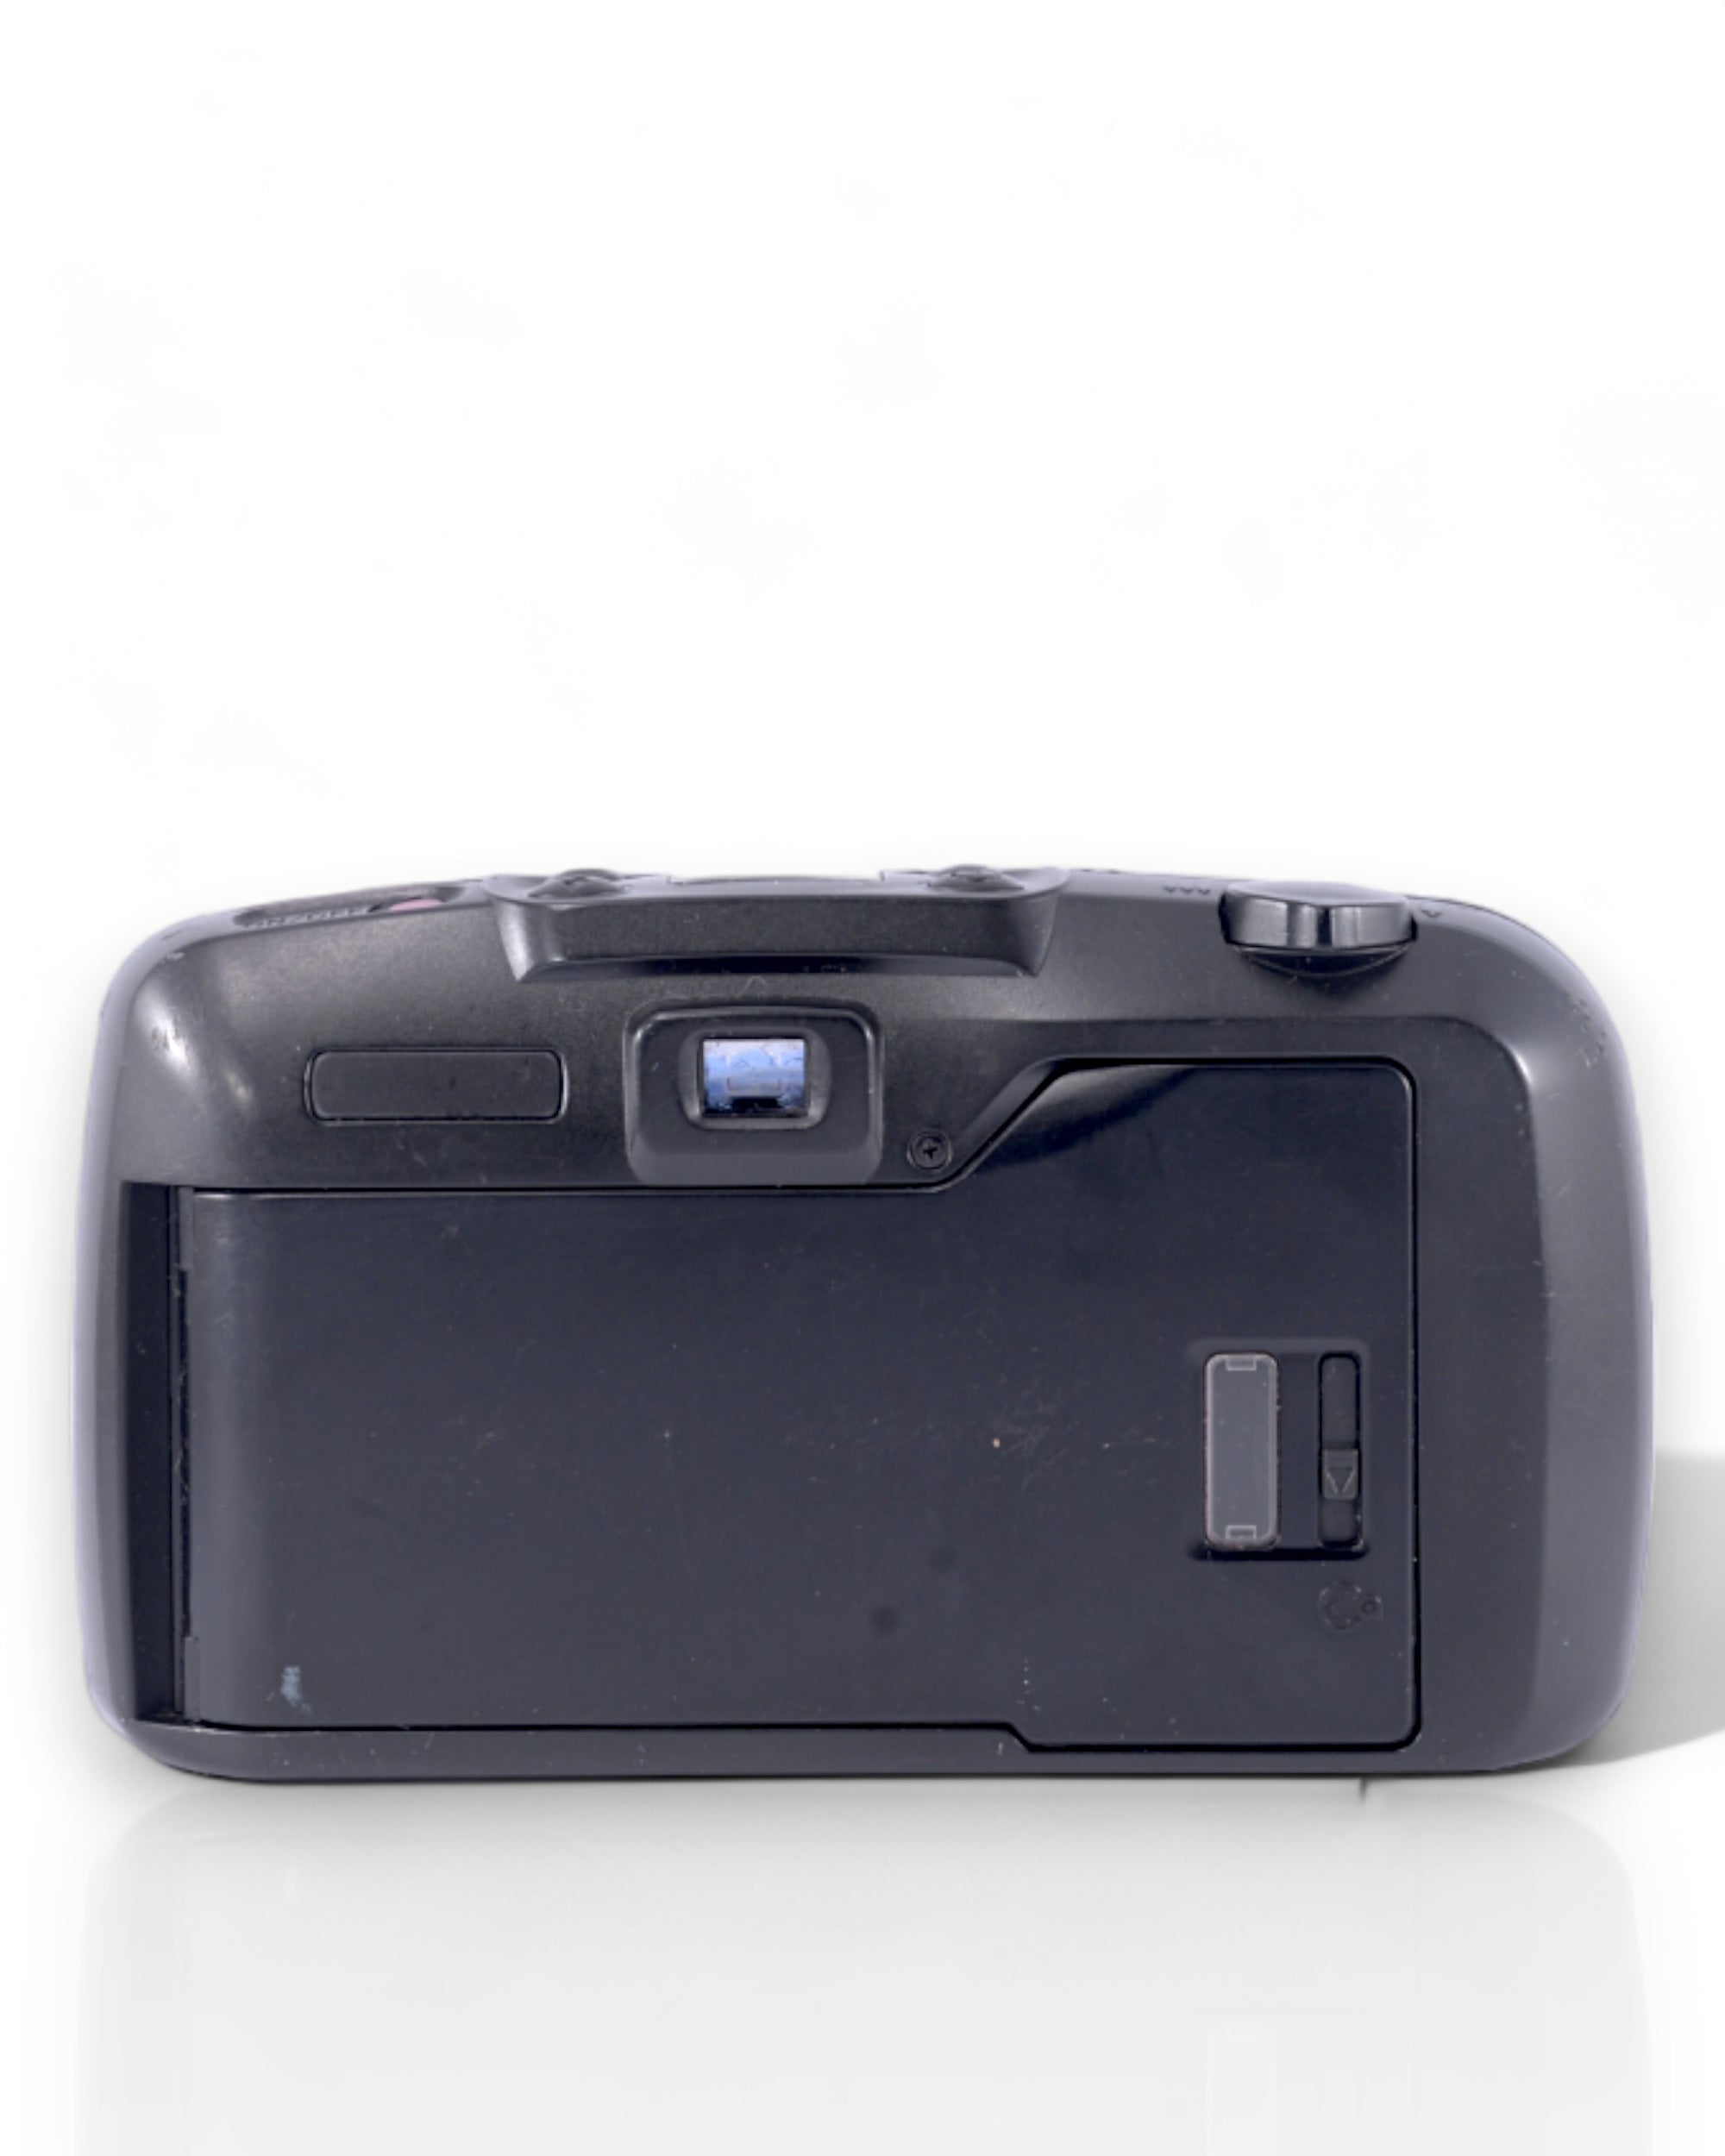 Pentax Espio 838 35mm Point & Shoot film camera with 38-80mm zoom lens